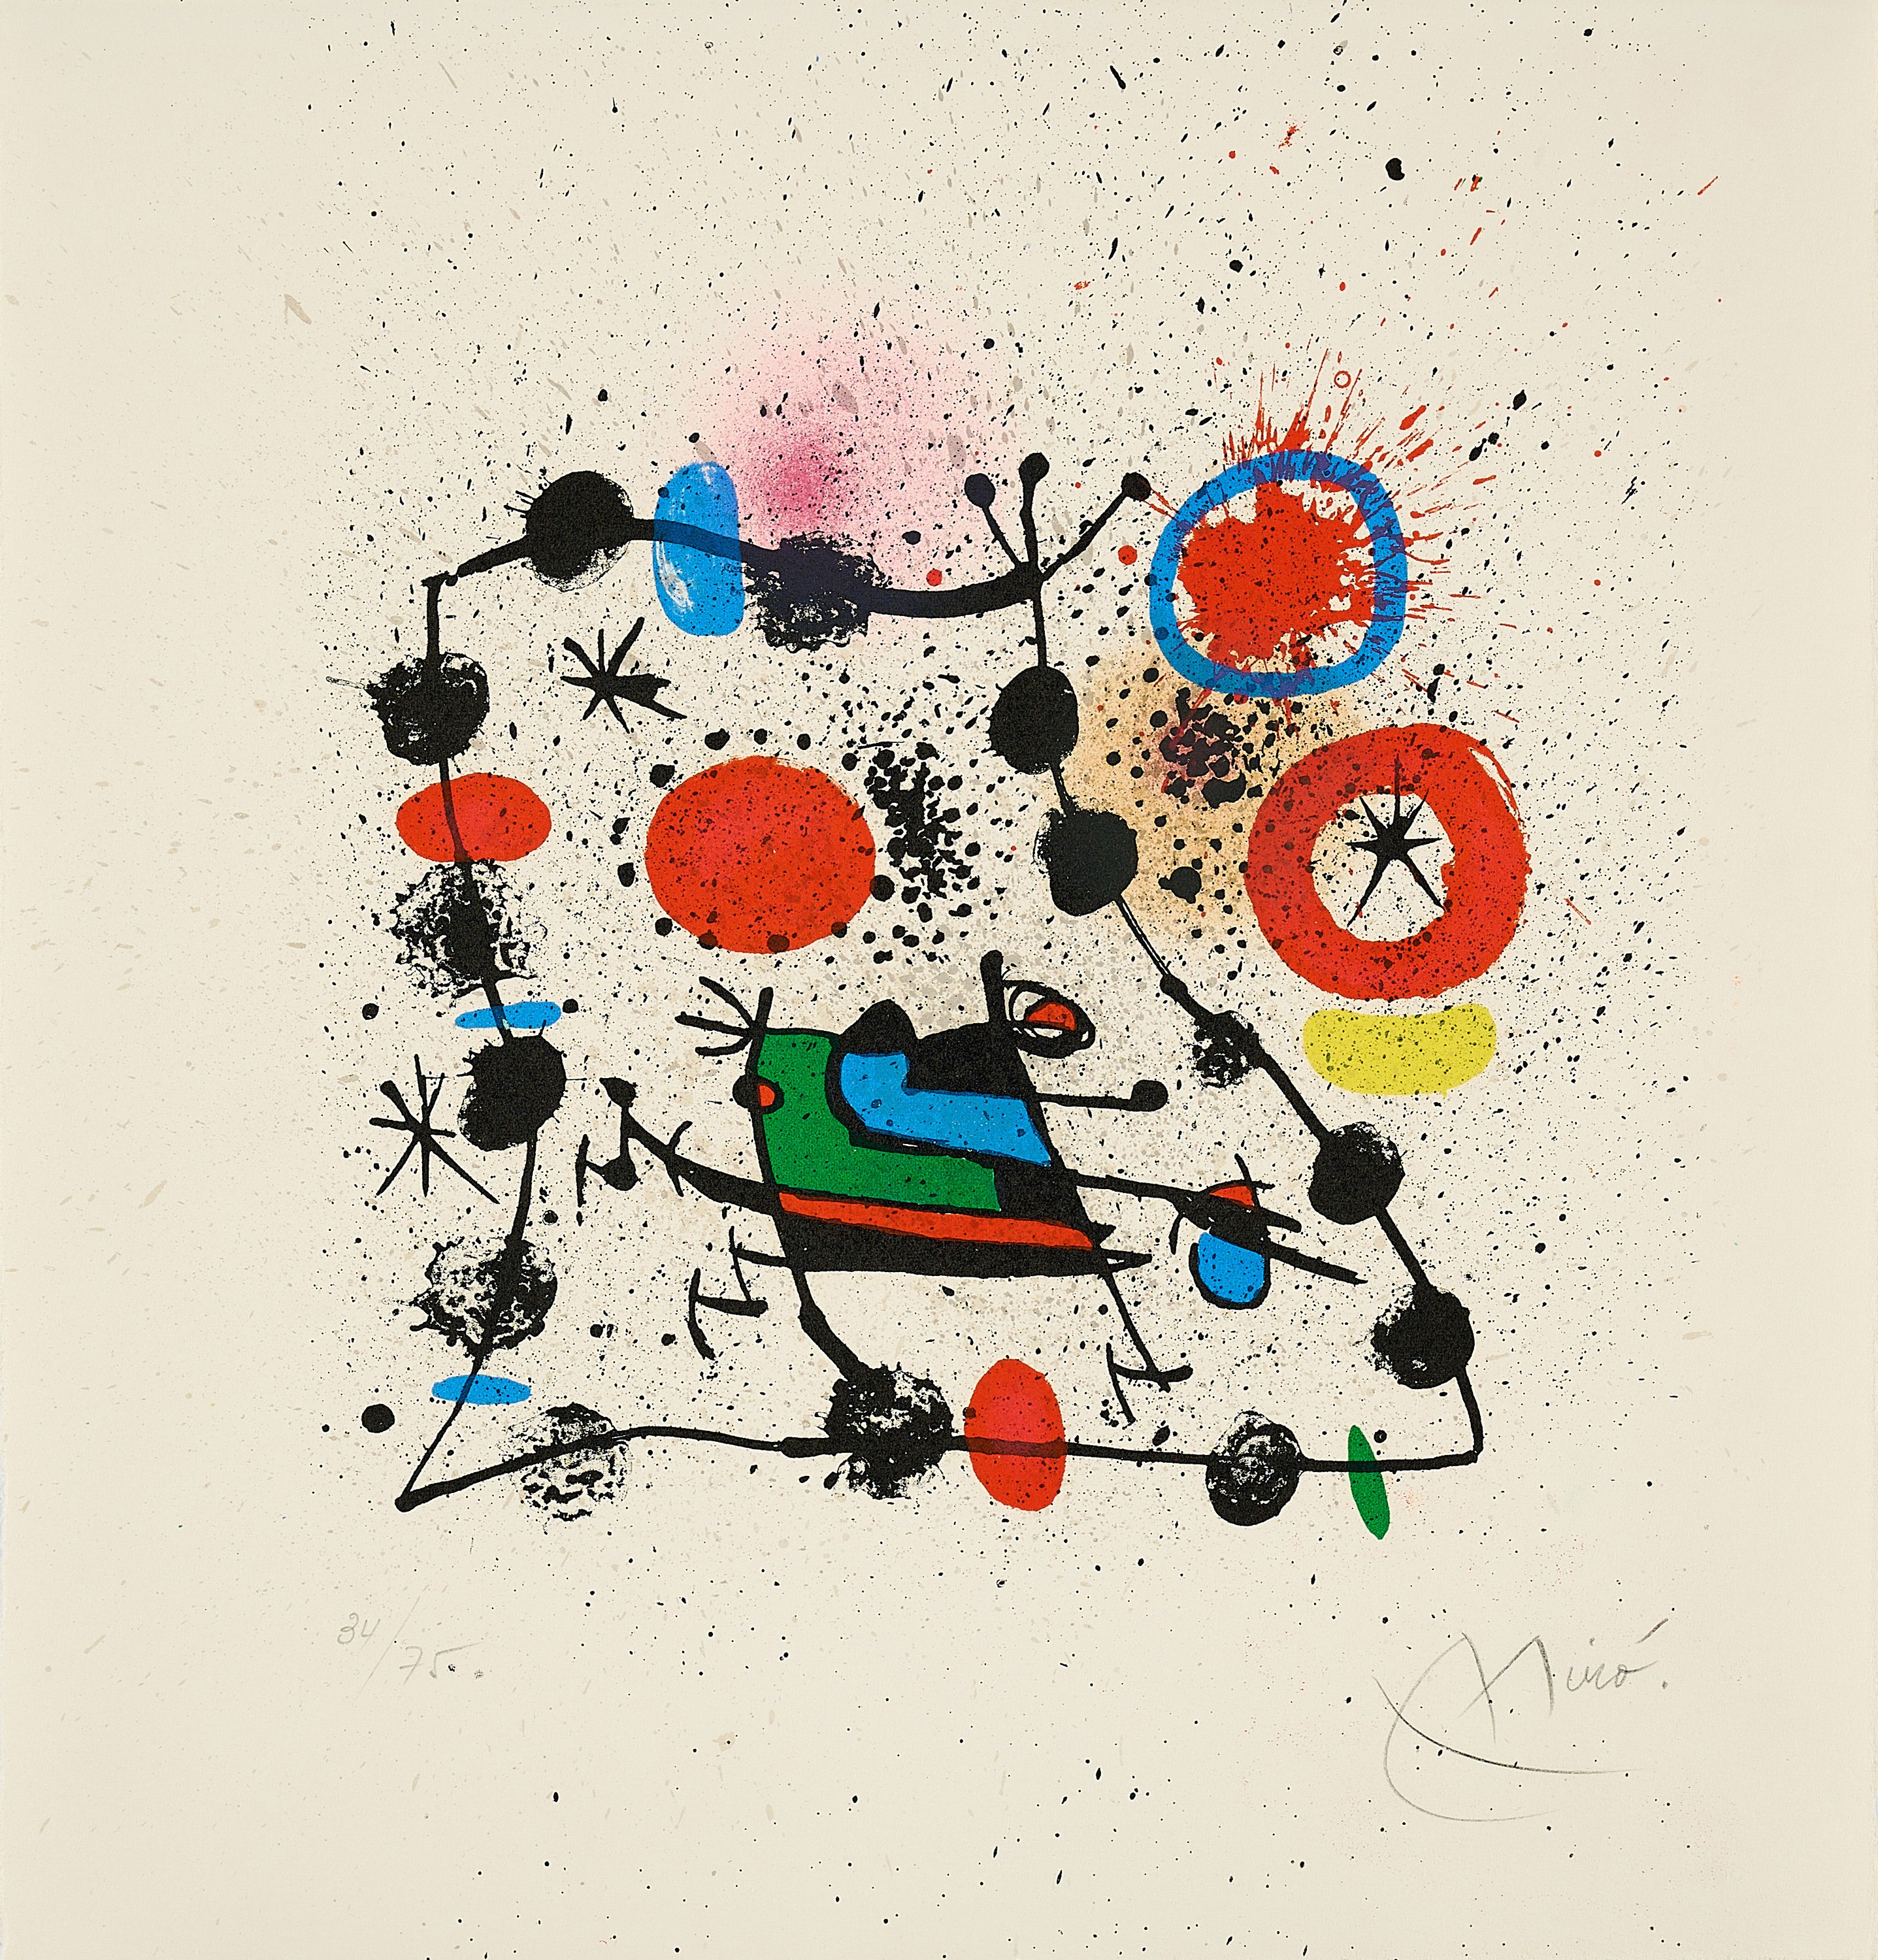 Joan Miro - Katalog fuer die Ausstellung Miro Sala Pelaires Palma de Mallorca, 77949-1, Van Ham Kunstauktionen